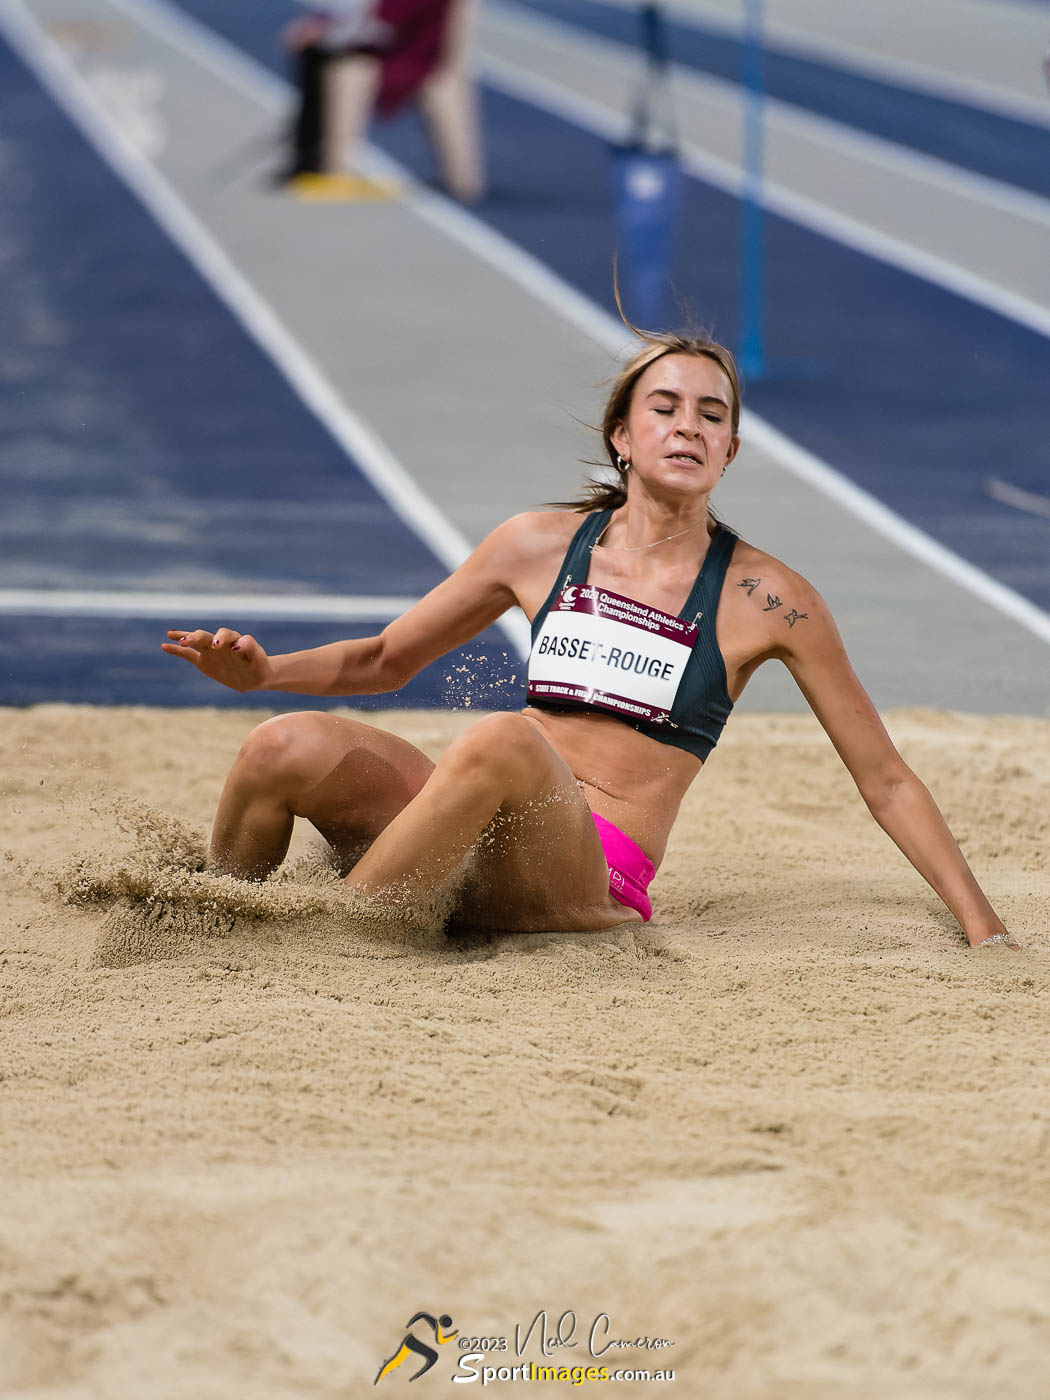 Lucie Basset-Rouge, Women Under 18 Long Jump